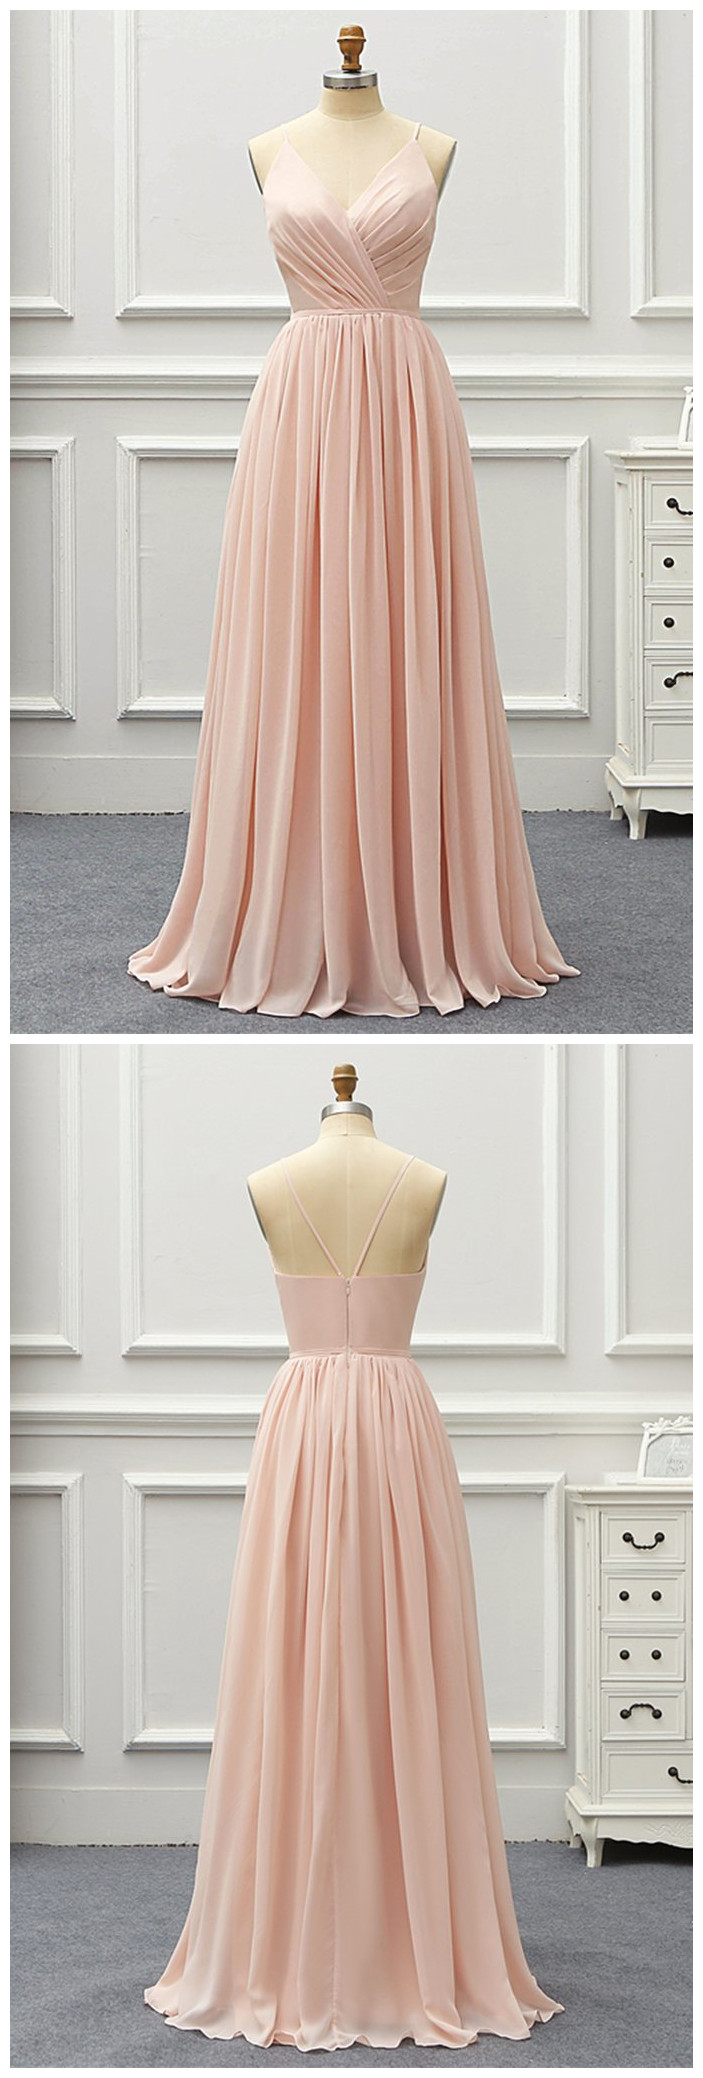 Beautiful Pink Chiffon Strps Long Prom Dress, Pink Bridesmaid Dress, Evening Gown